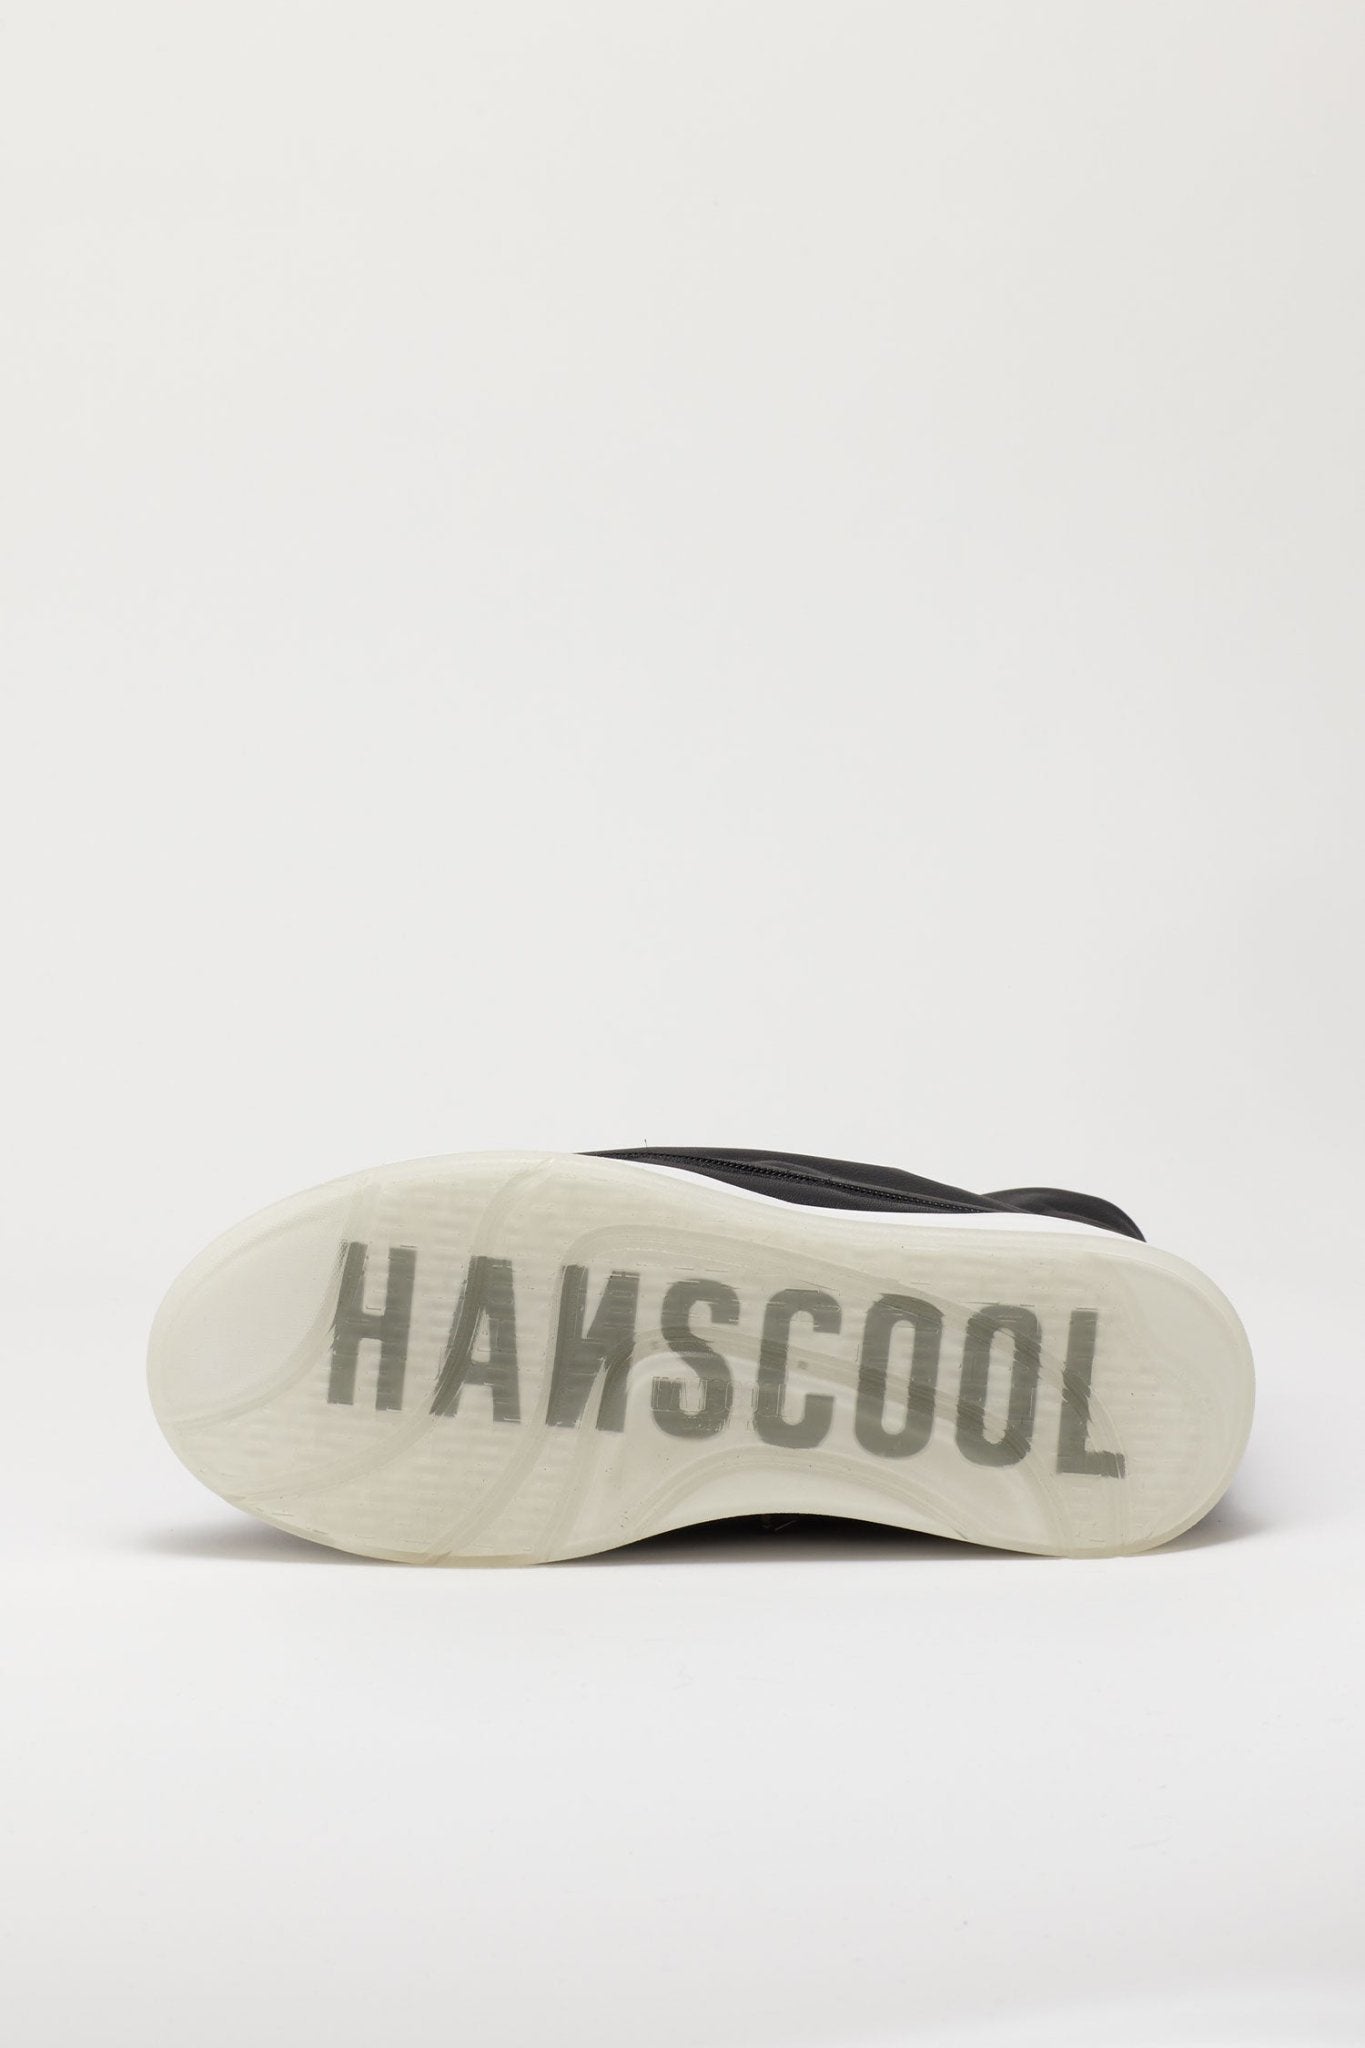 Hanscool Brando Shoes - Magnlens